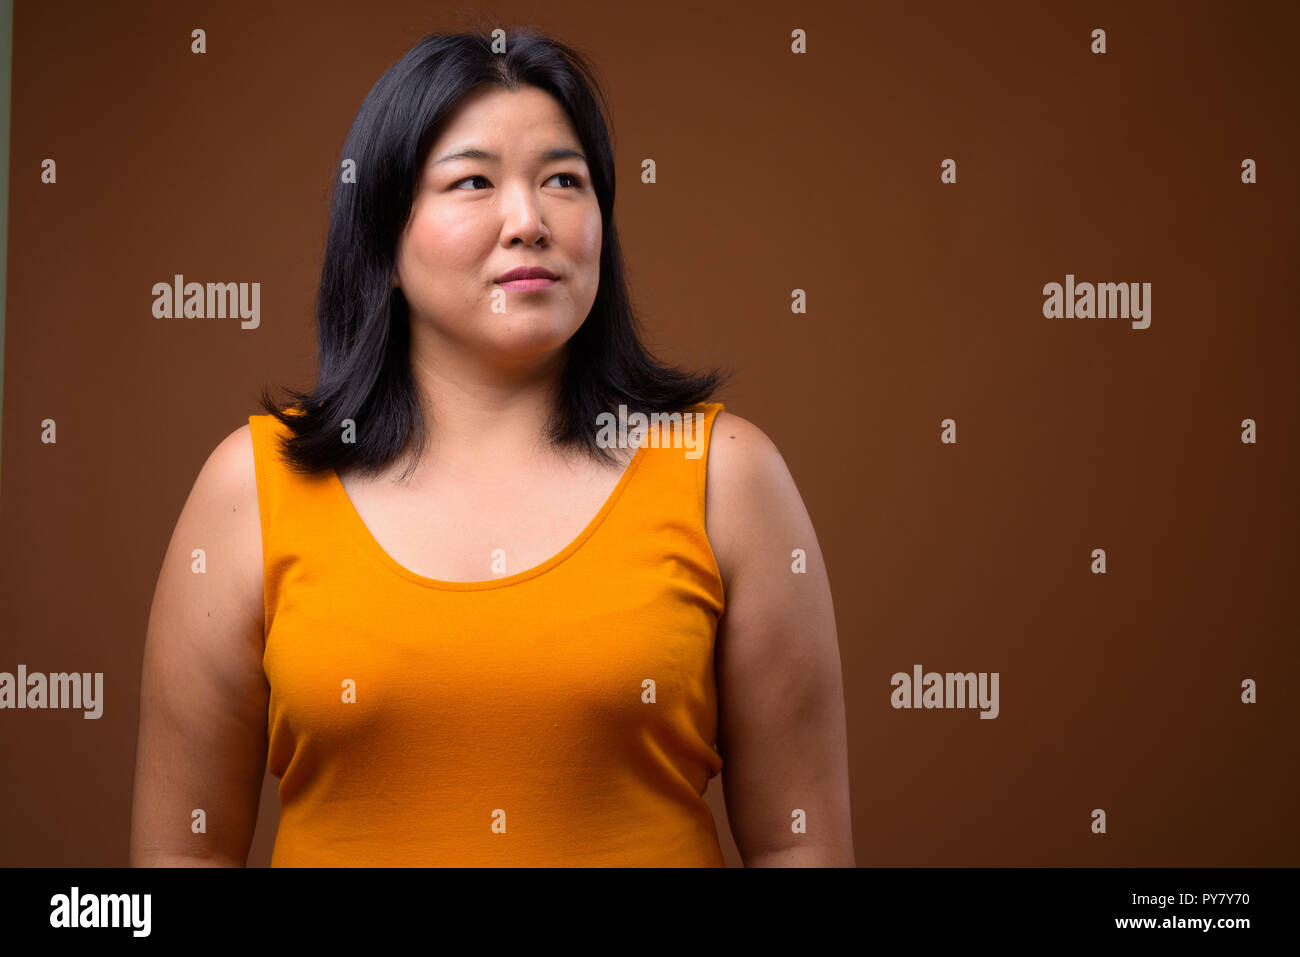 Portrait of beautiful overweight Asian woman thinking Stock Photo